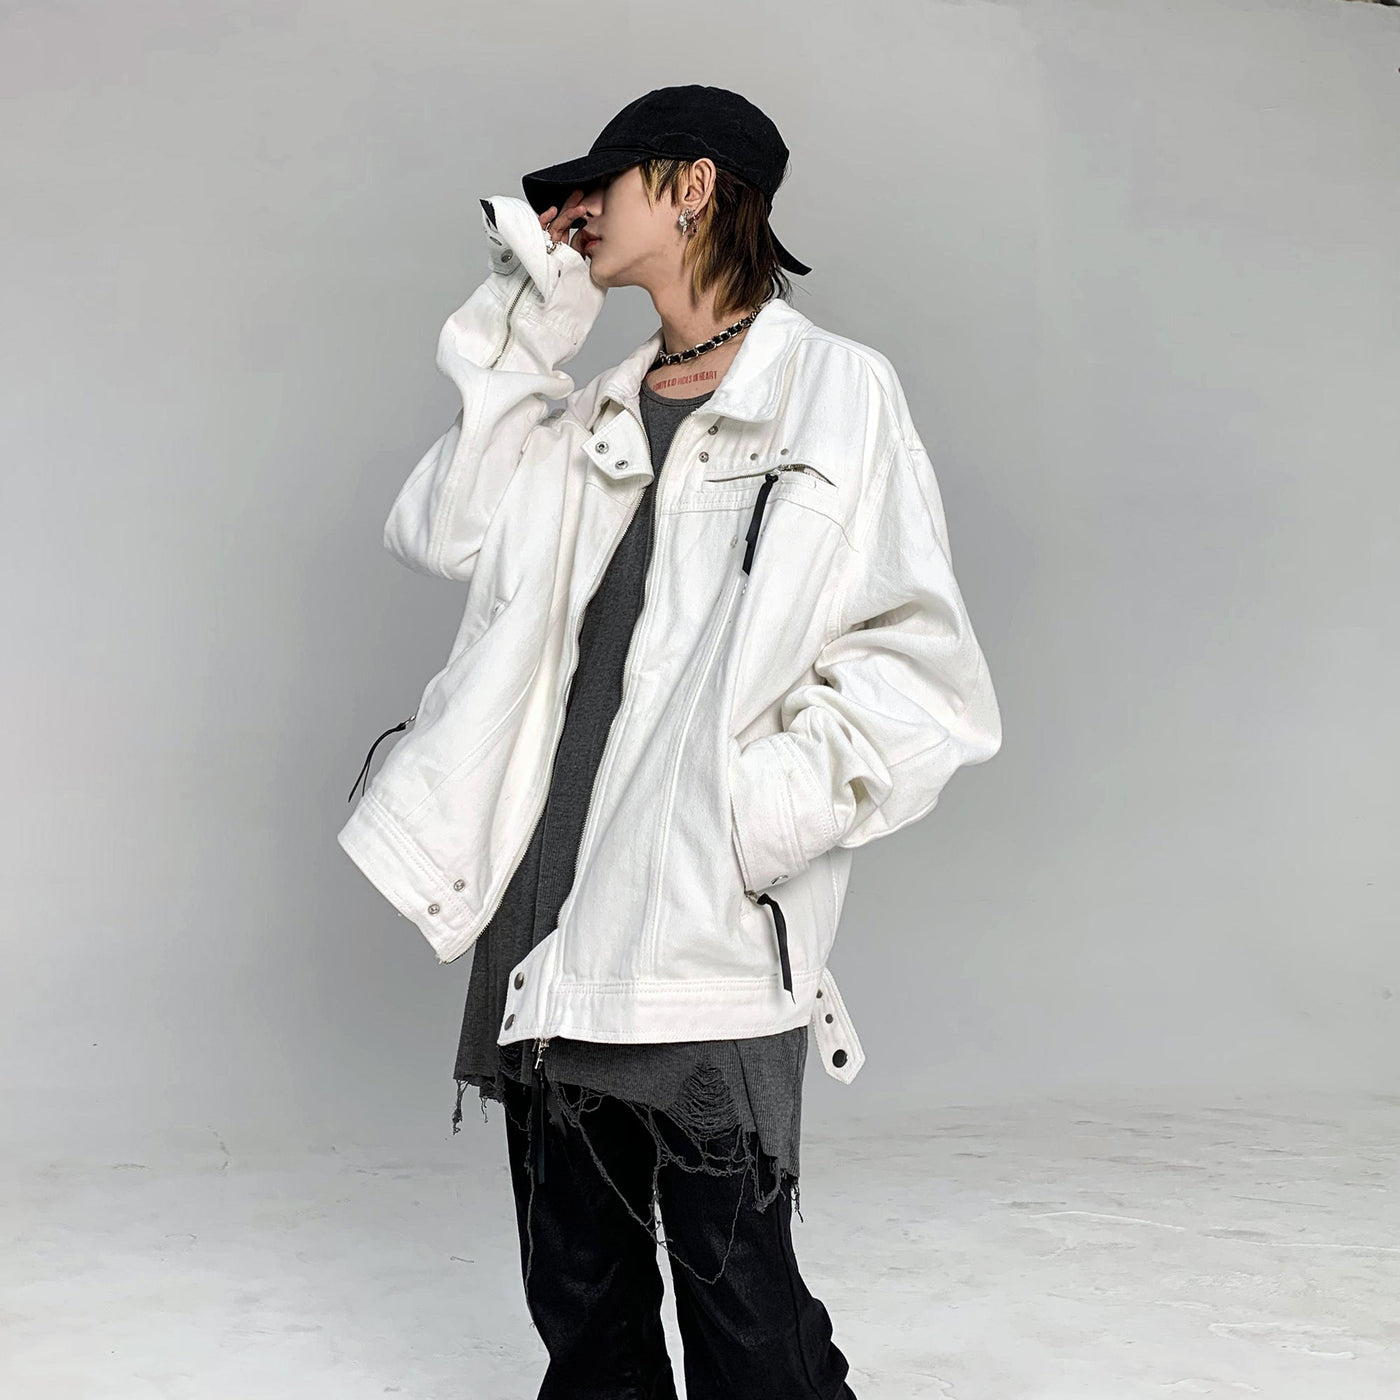 Loose Snap Button Jacket Korean Street Fashion Jacket By Ash Dark Shop Online at OH Vault